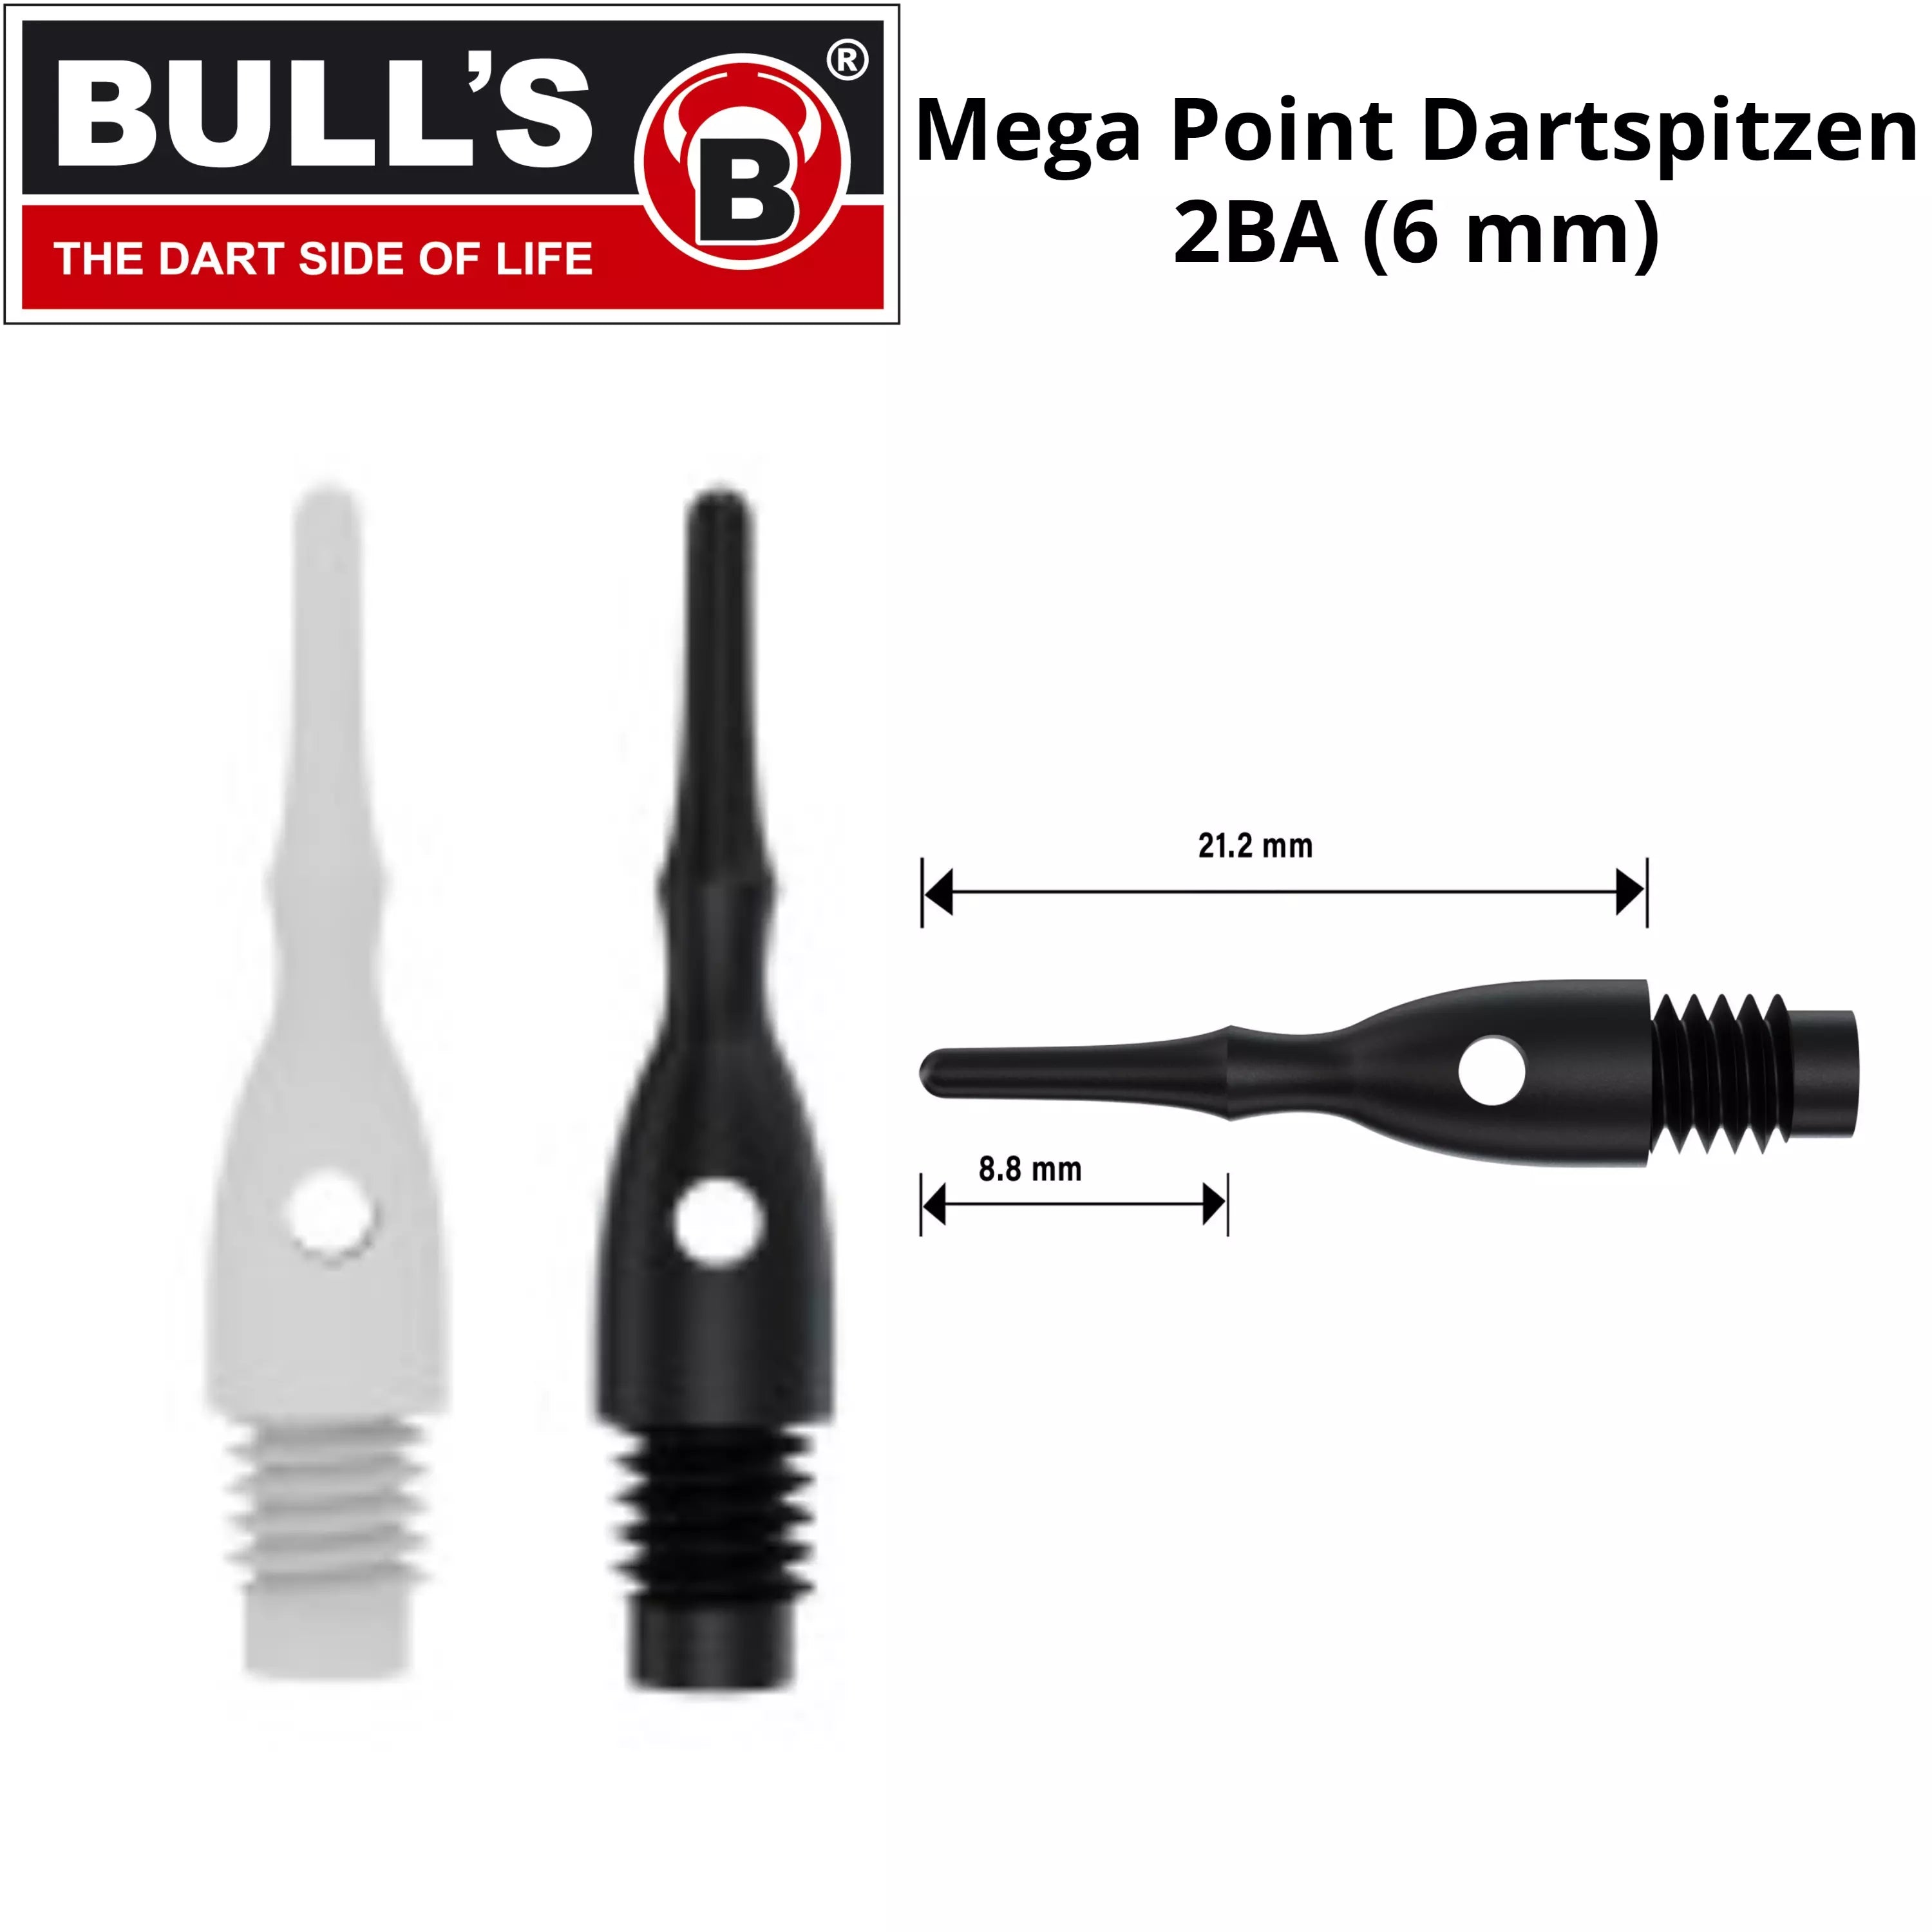 Bulls Mega Point Short Dartspitzen 2BA Soft Tip Points - 100/1000 Stück